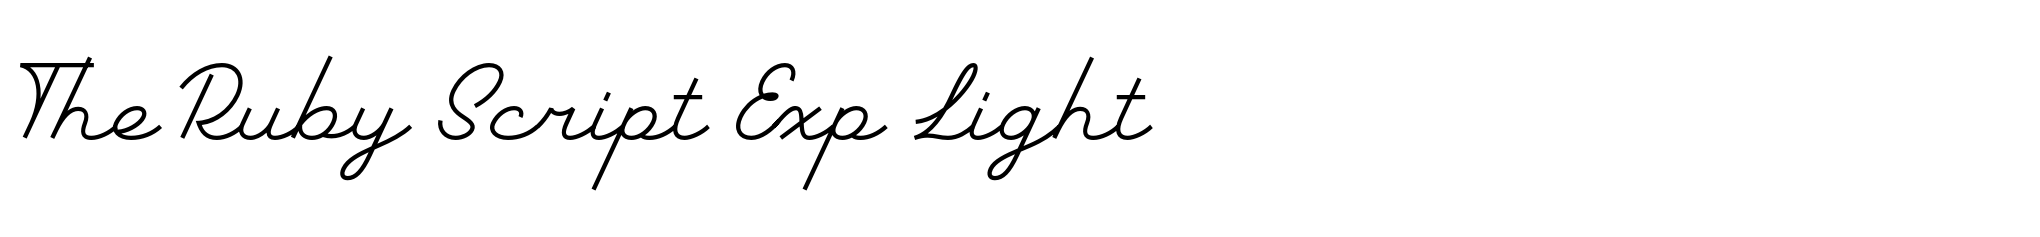 The Ruby Script Exp Light image